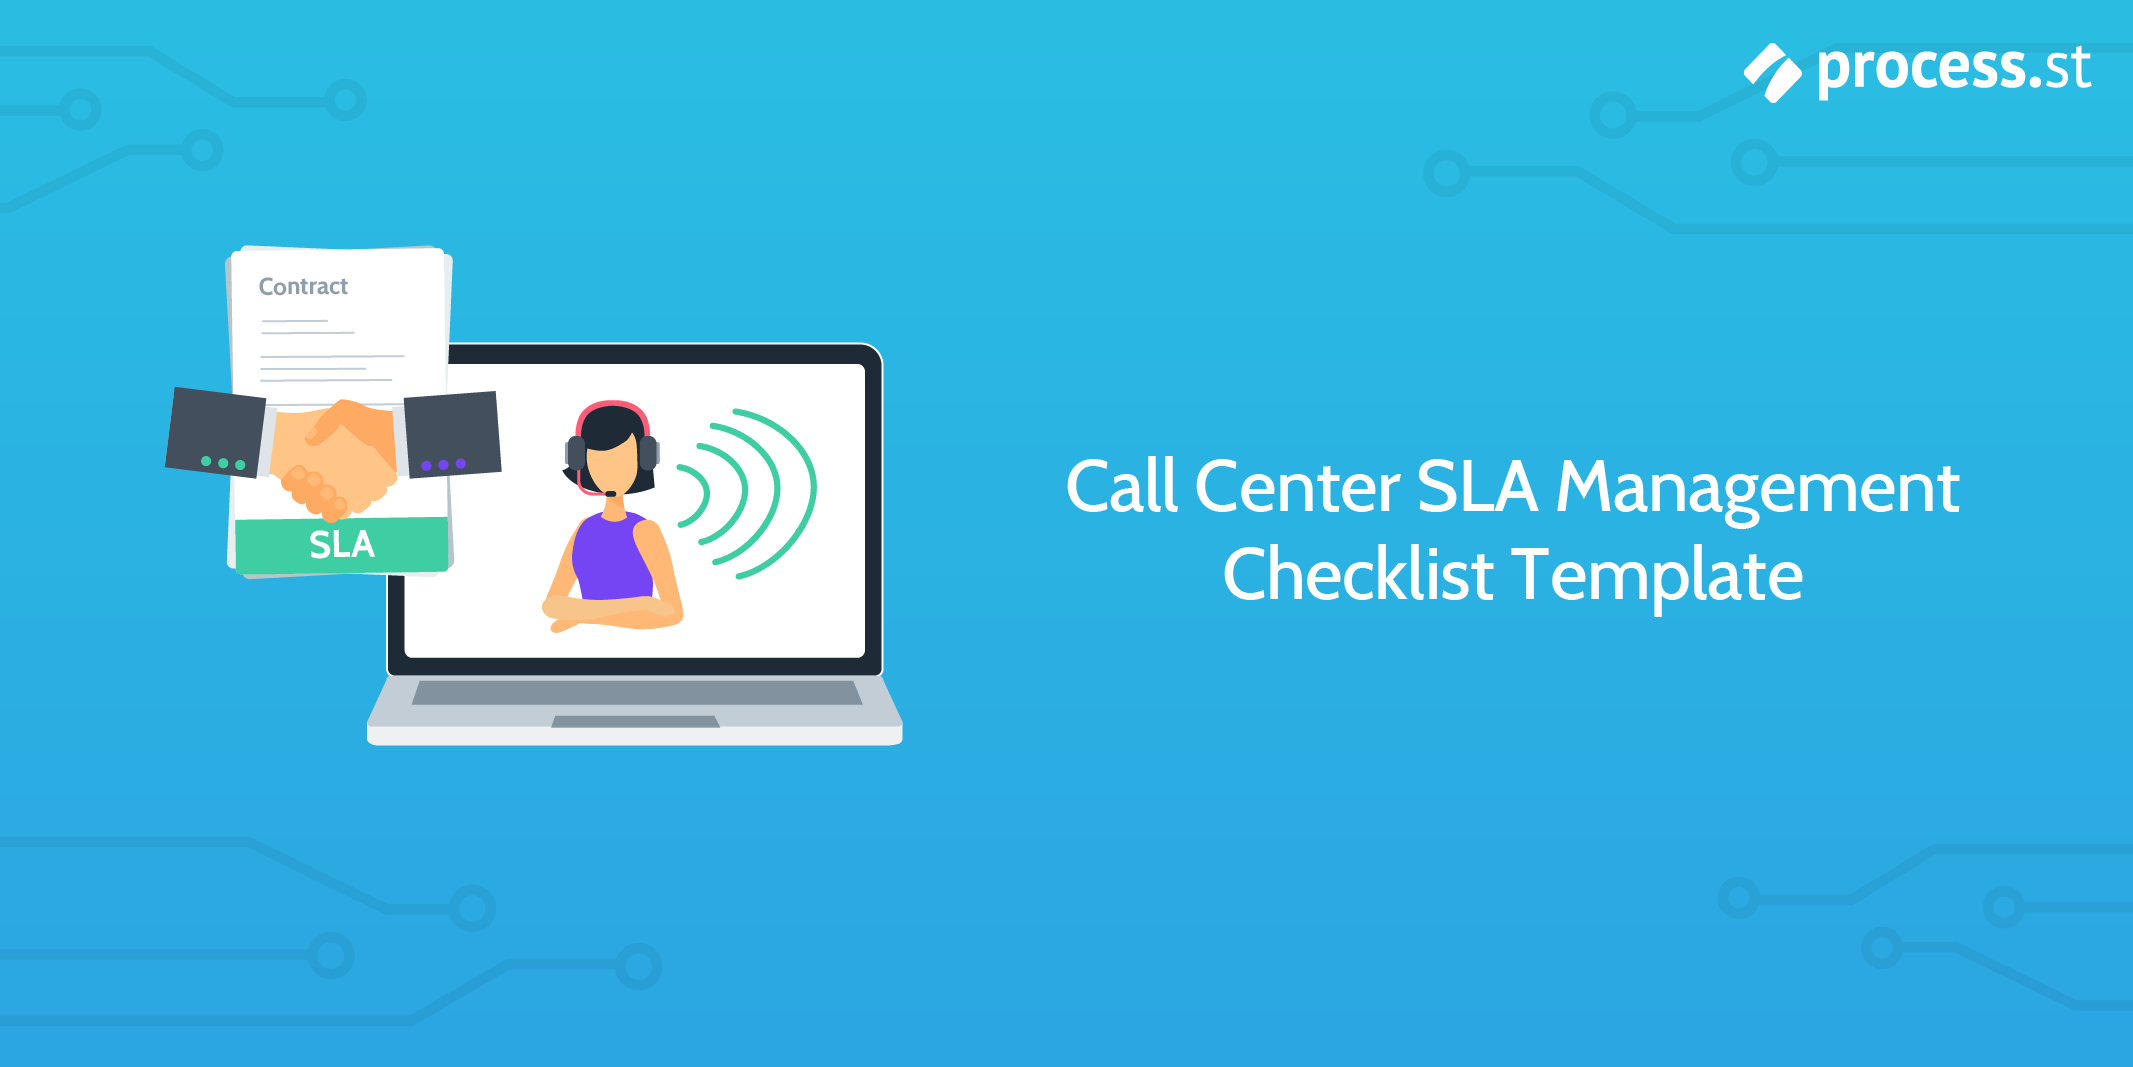 Call Center SLA Management Checklist Template  Process Street For Call Center Checklist Template For Call Center Checklist Template